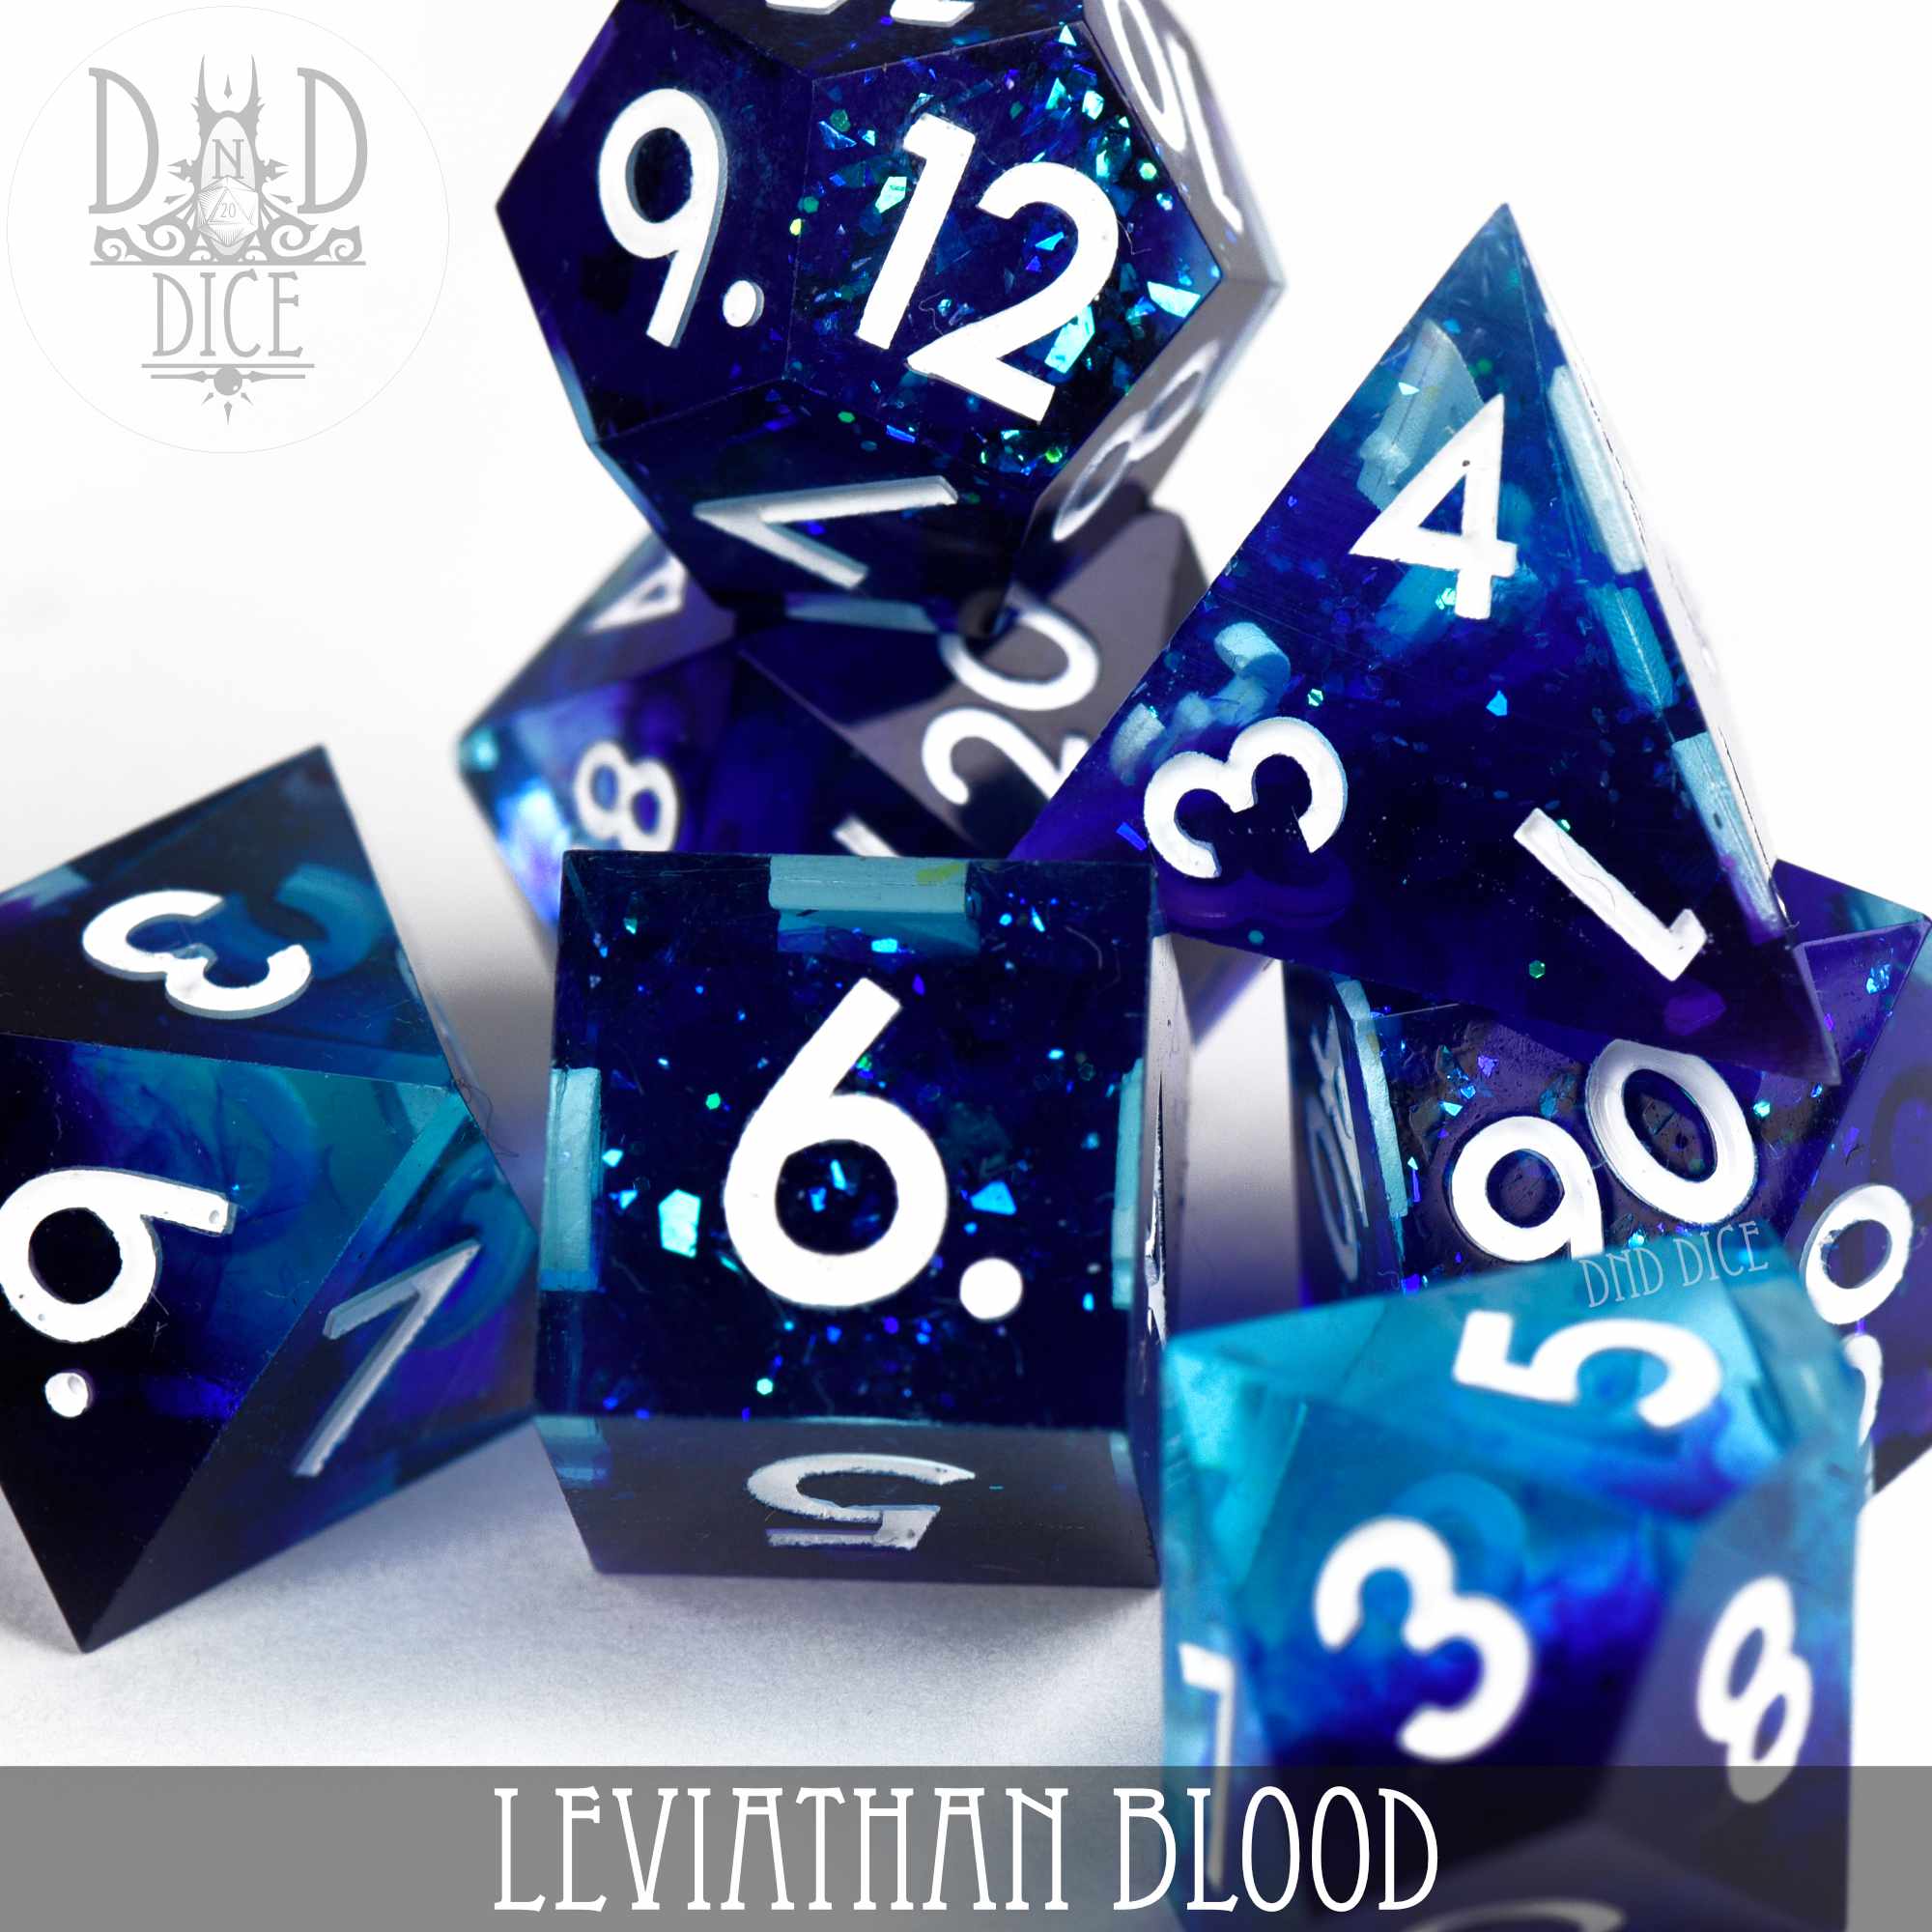 Leviathan Blood Handmade Dice Set